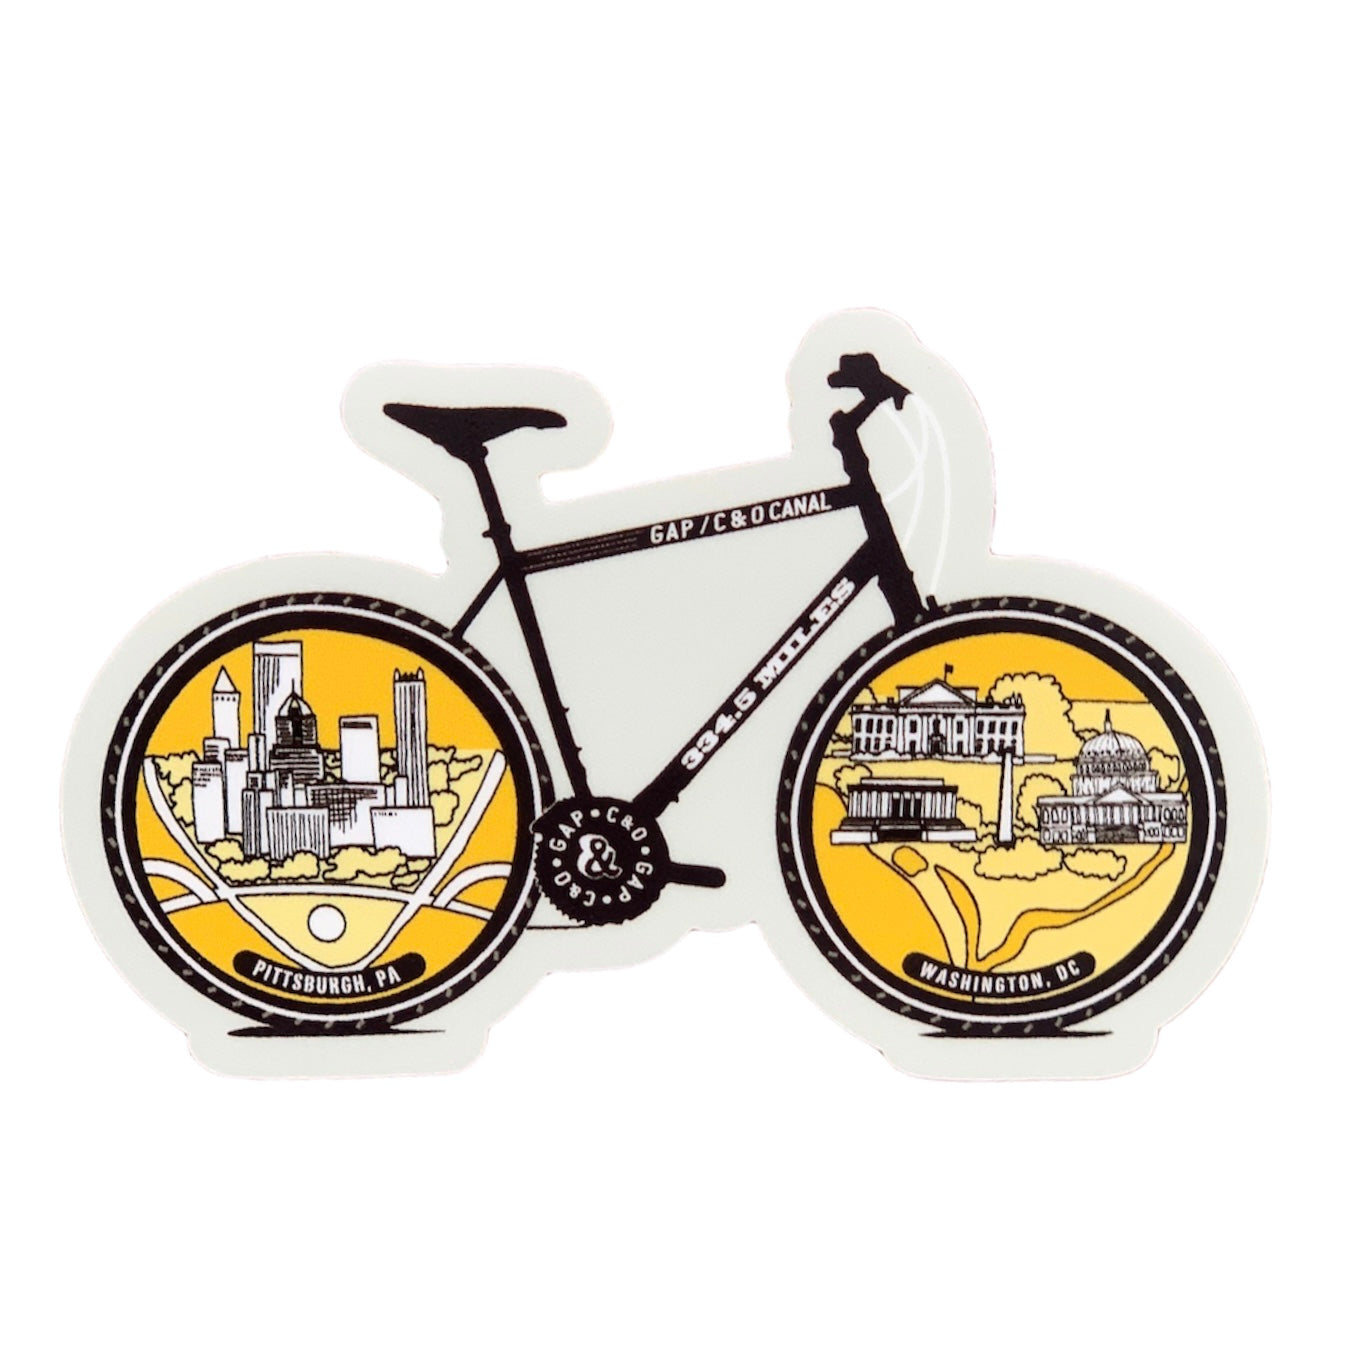 GAP/C&O Canal Bike Sticker 3 inch